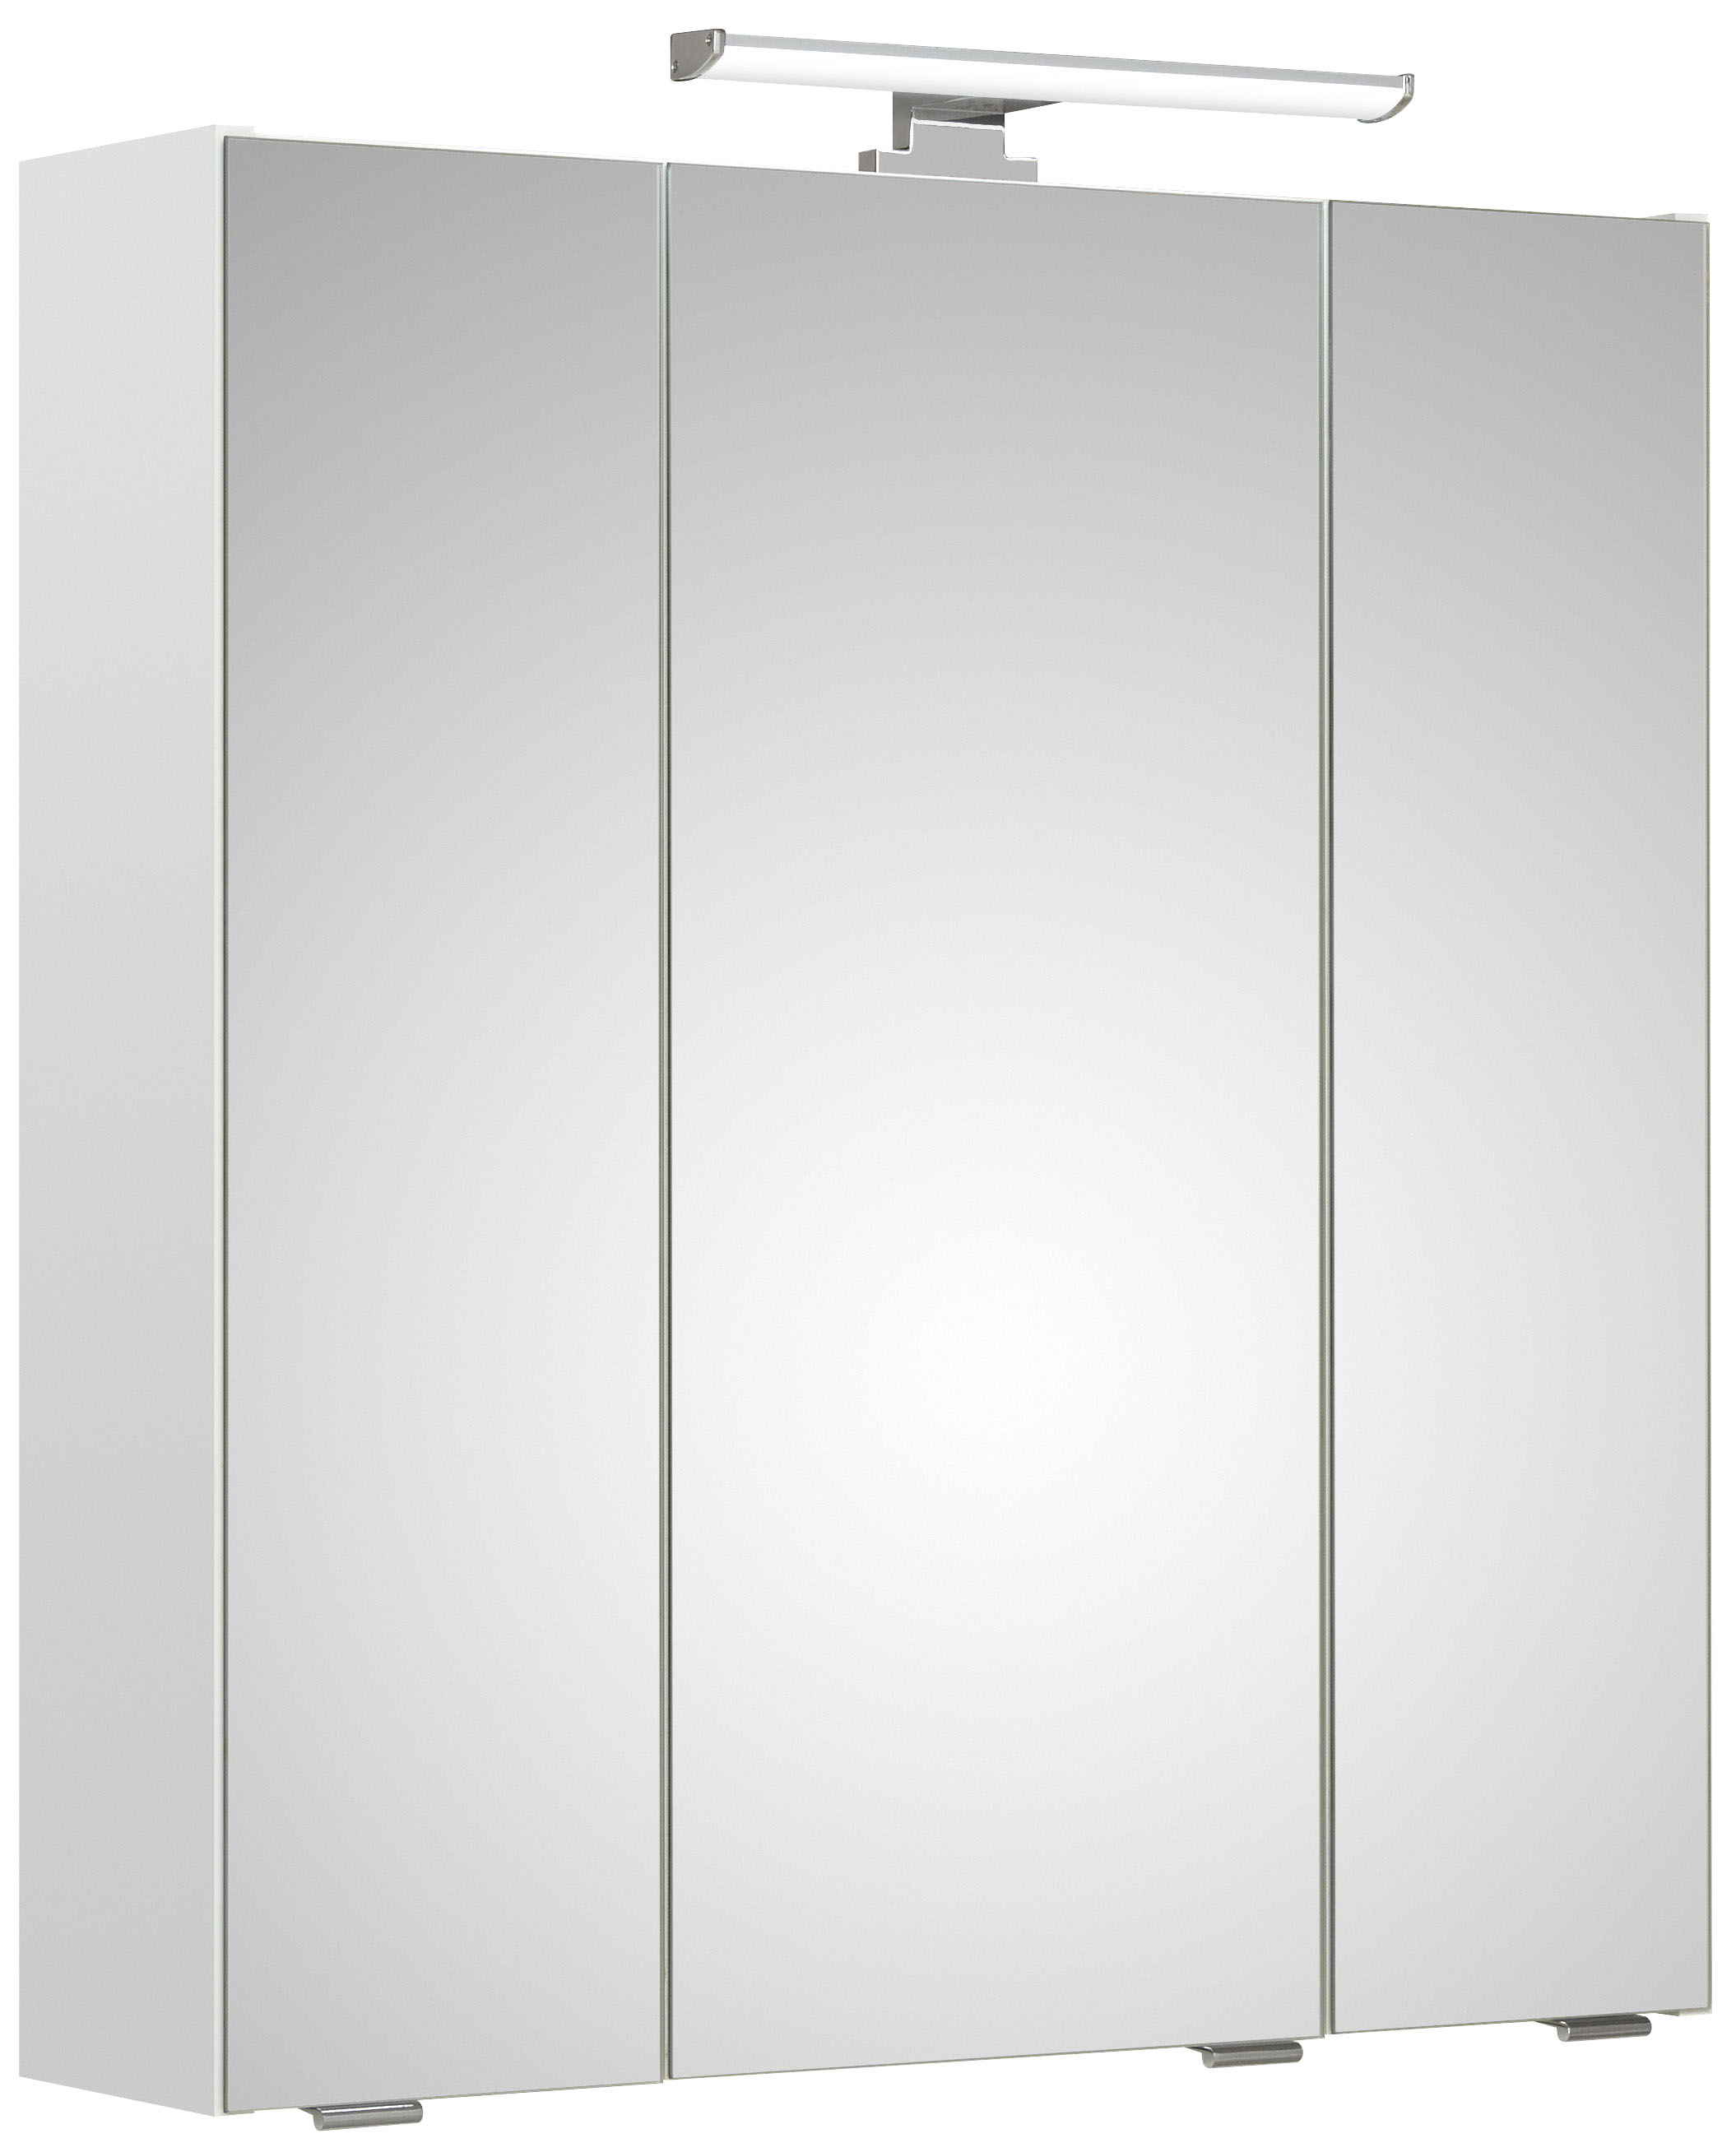 PELIPAL Spiegelschrank "Quickset", Breite 65 cm, 3-türig, LED-Beleuchtung, Schalter-/Steckdosenbox